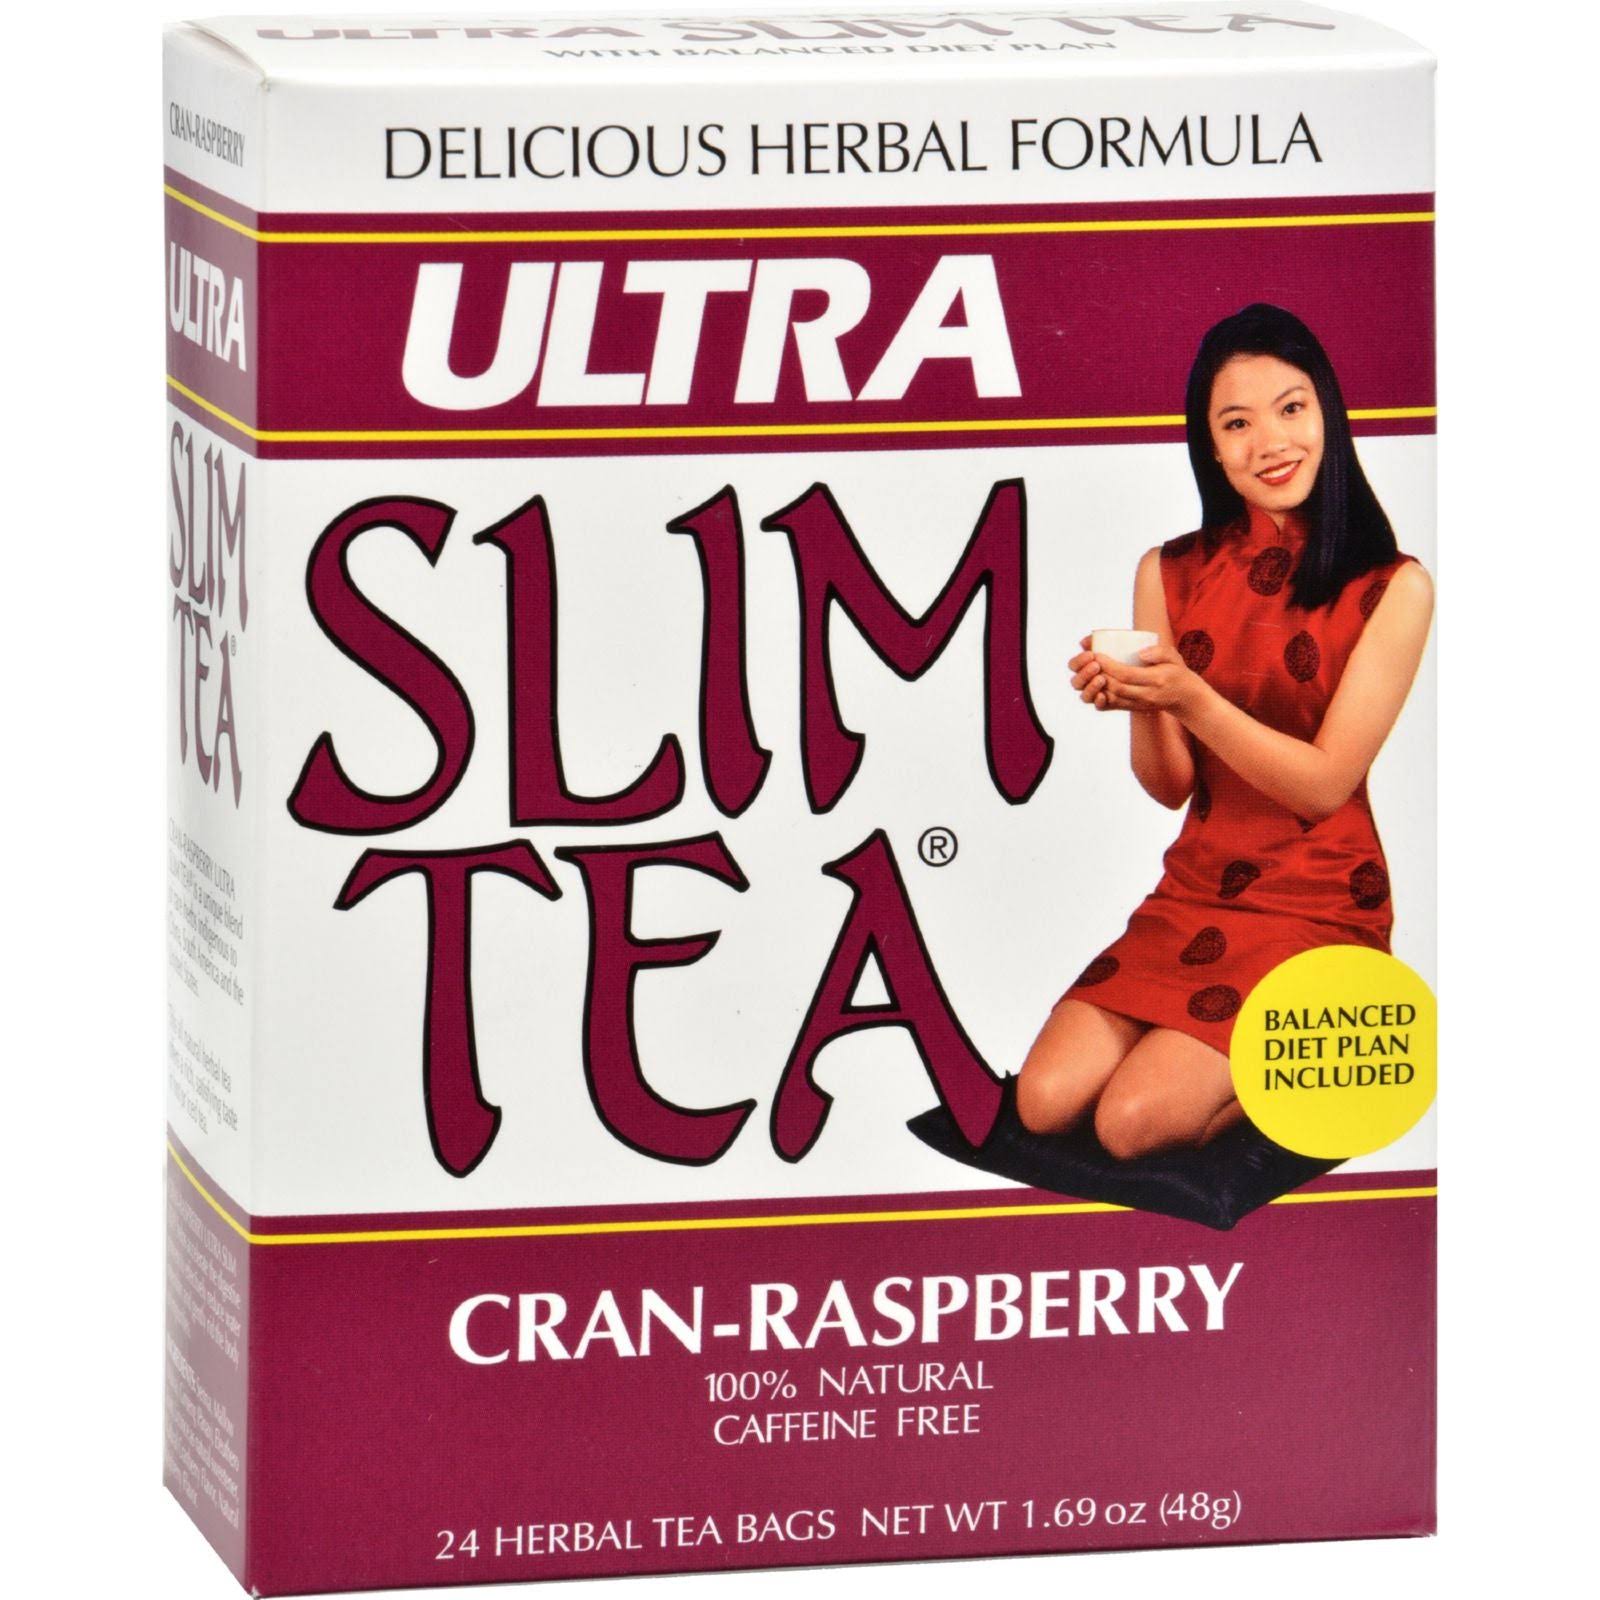 Ultra Slim Tea Herbal Tea - Cran-Raspberry, 24 Tea Bags, 48g